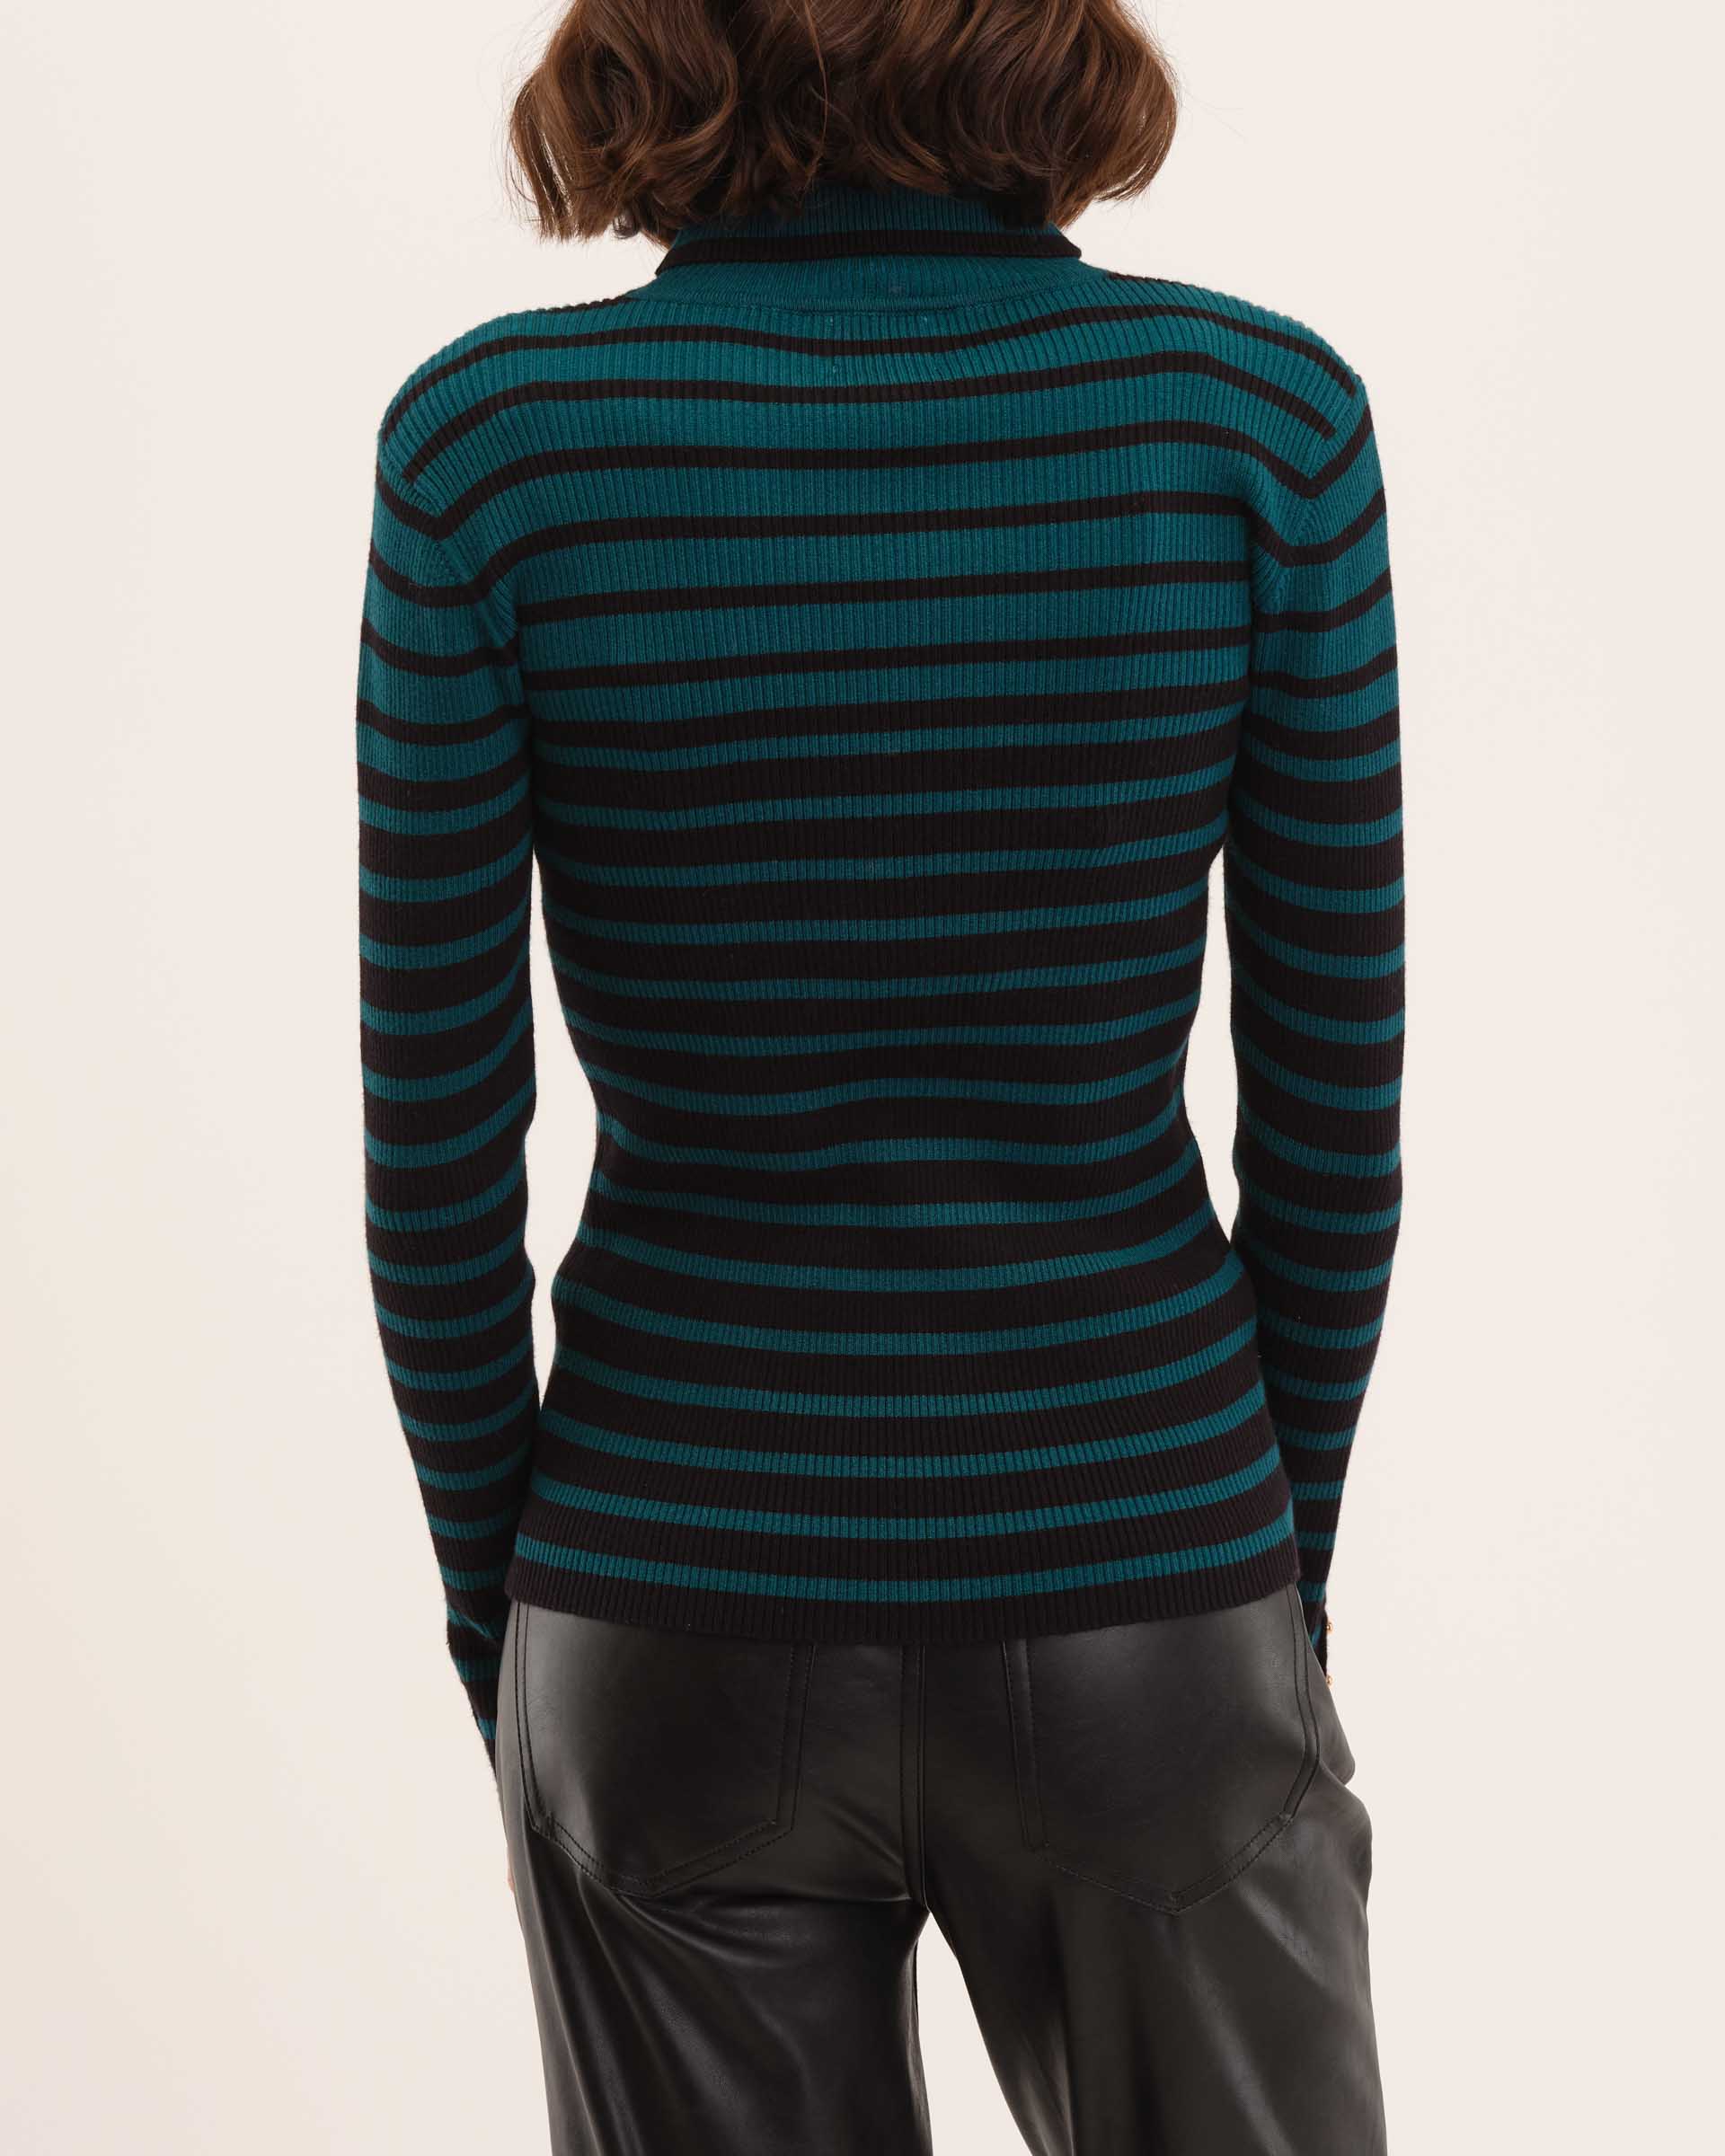 Shop Striped Turtleneck Sweater | Elie Elie Tahari | JANE + MERCER